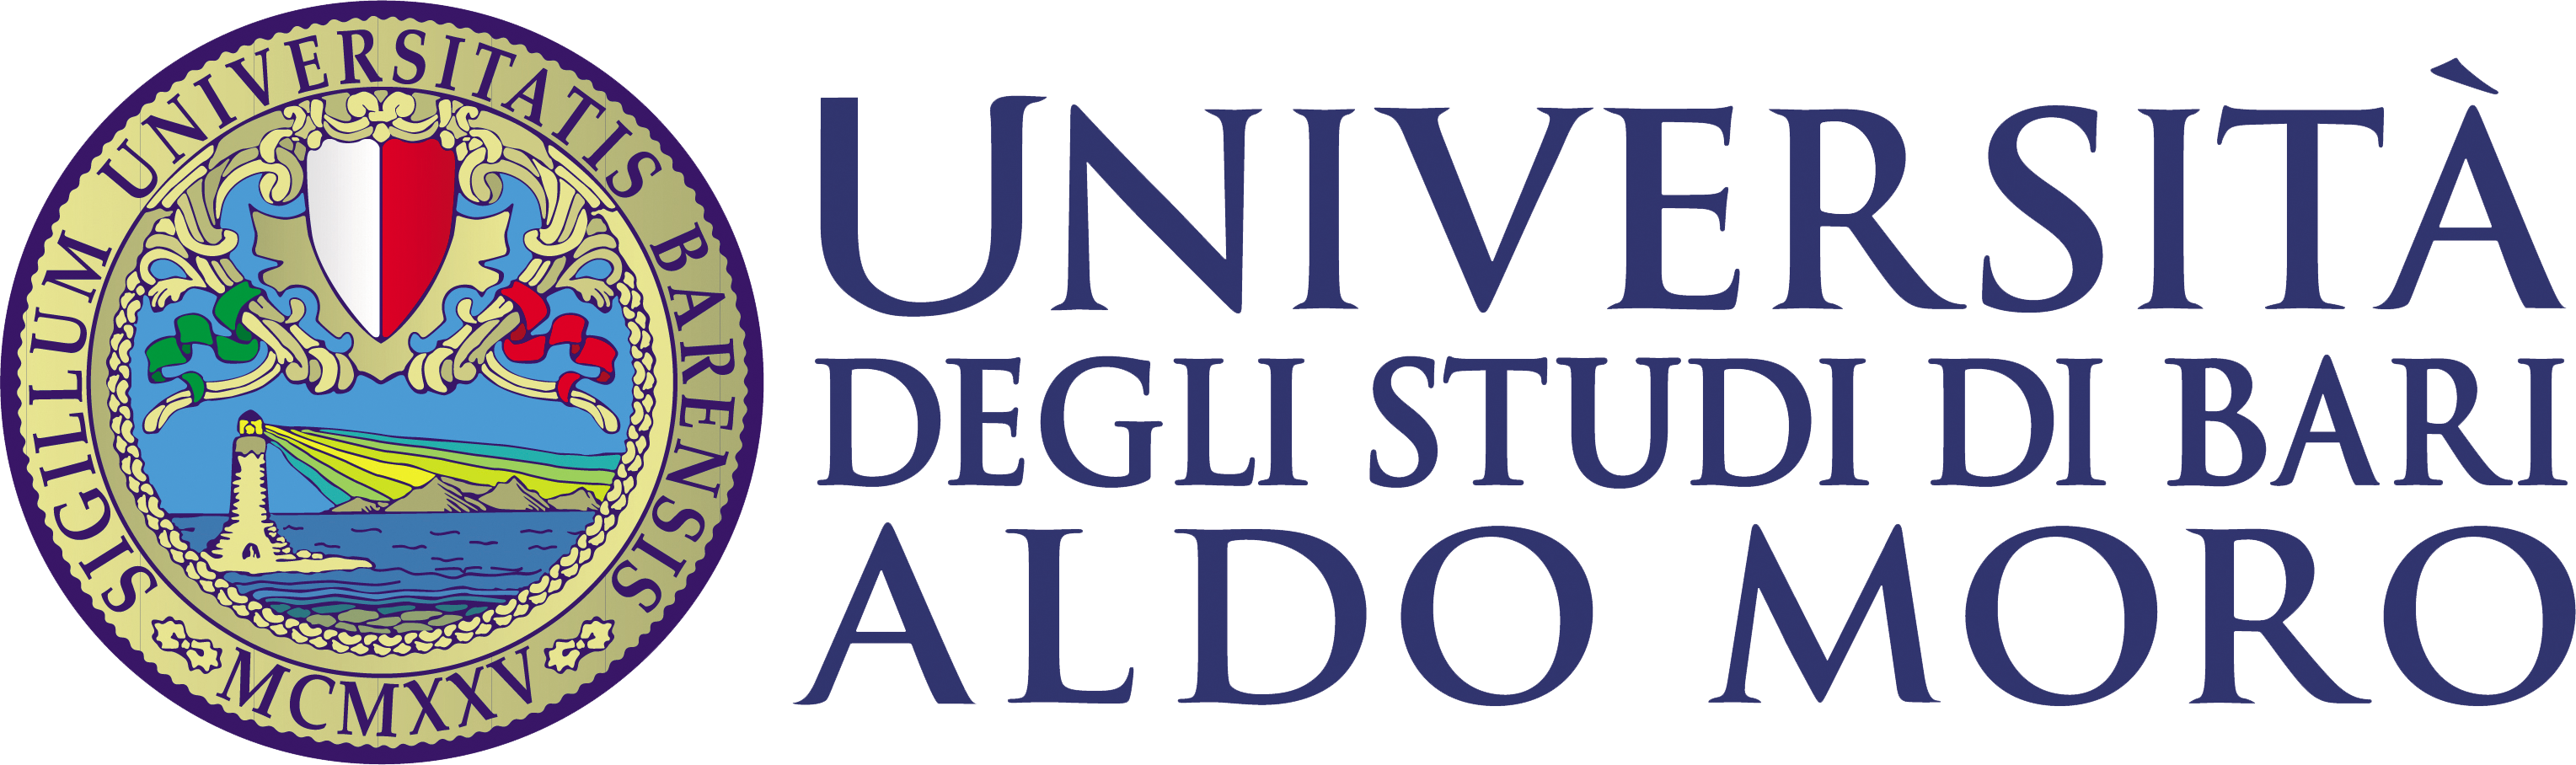 University of Bari "Aldo Moro"